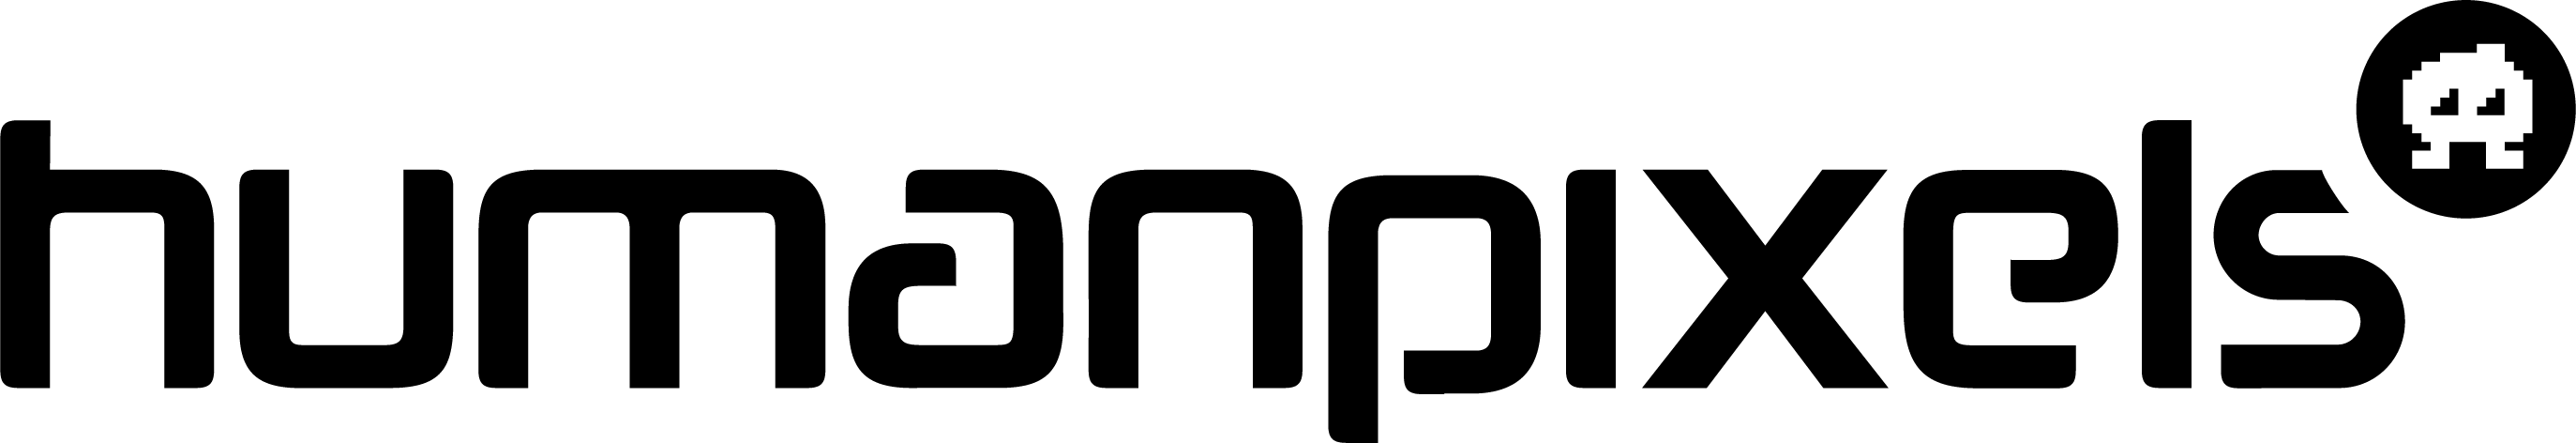 humanpixels logo